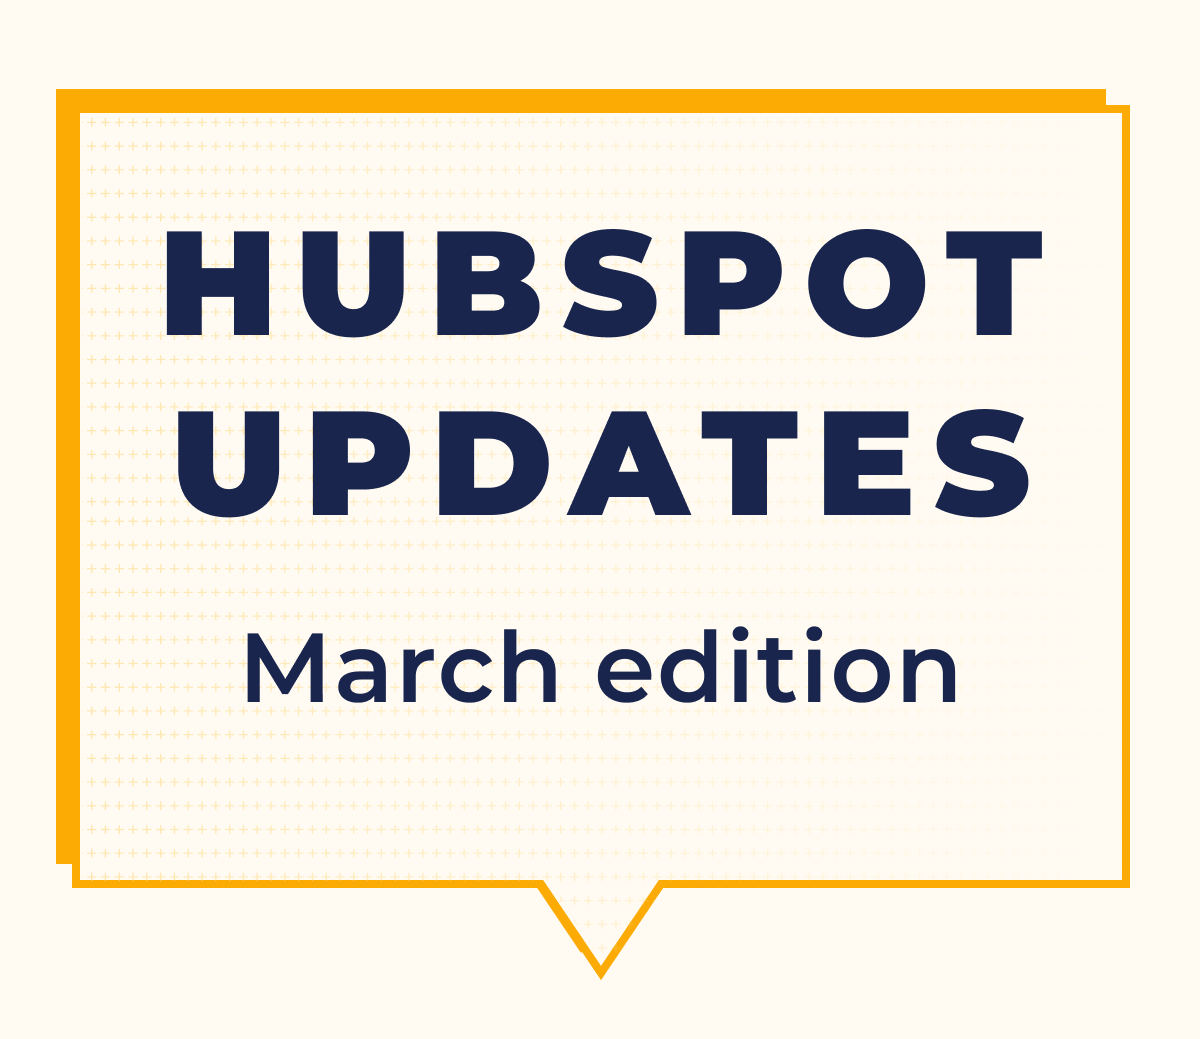 hubspot updates March edition